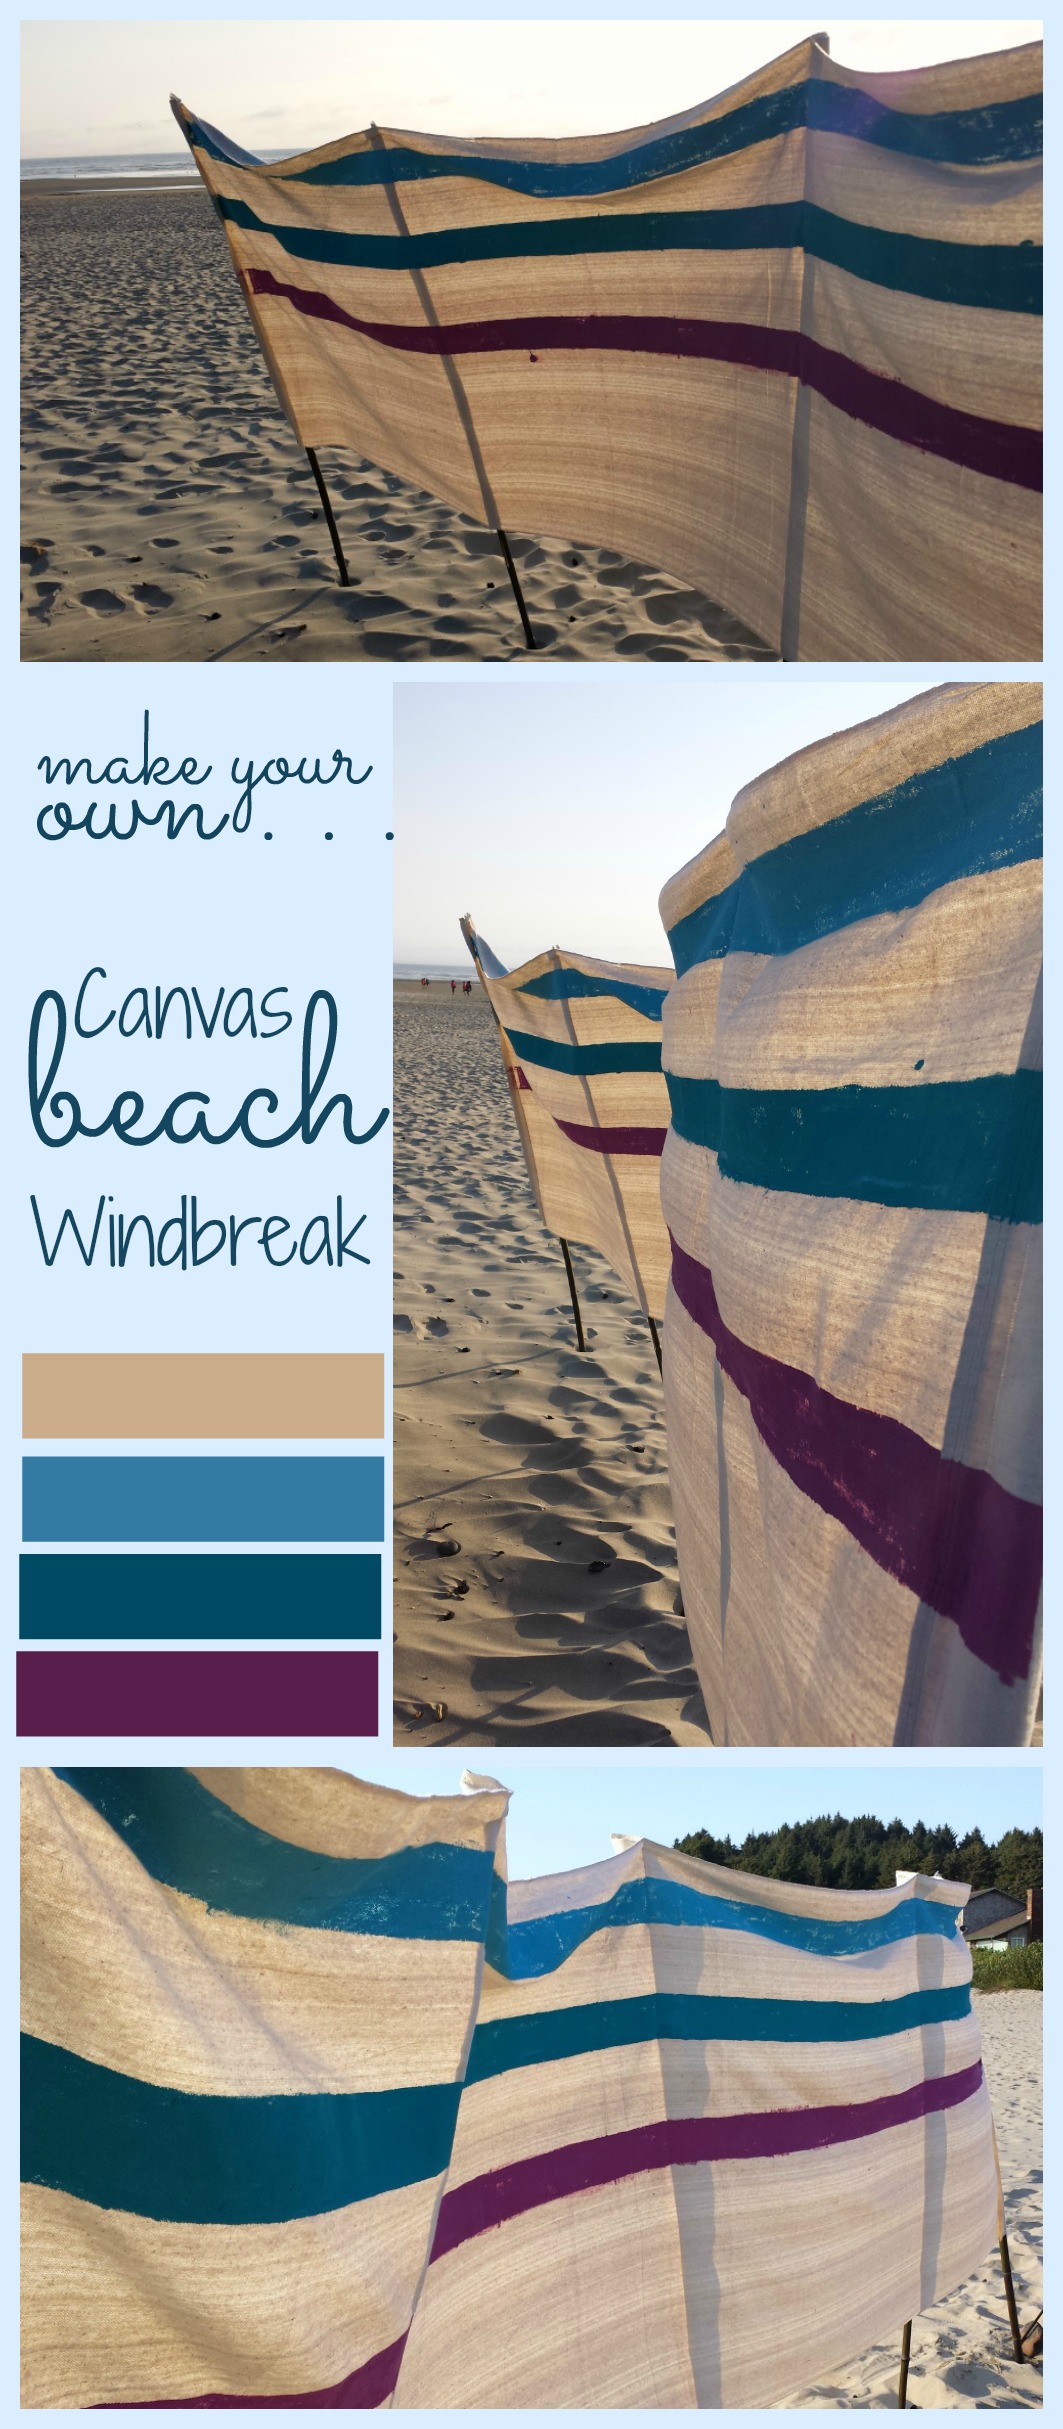  Vytvořte si vlastní canvas beach windbreak